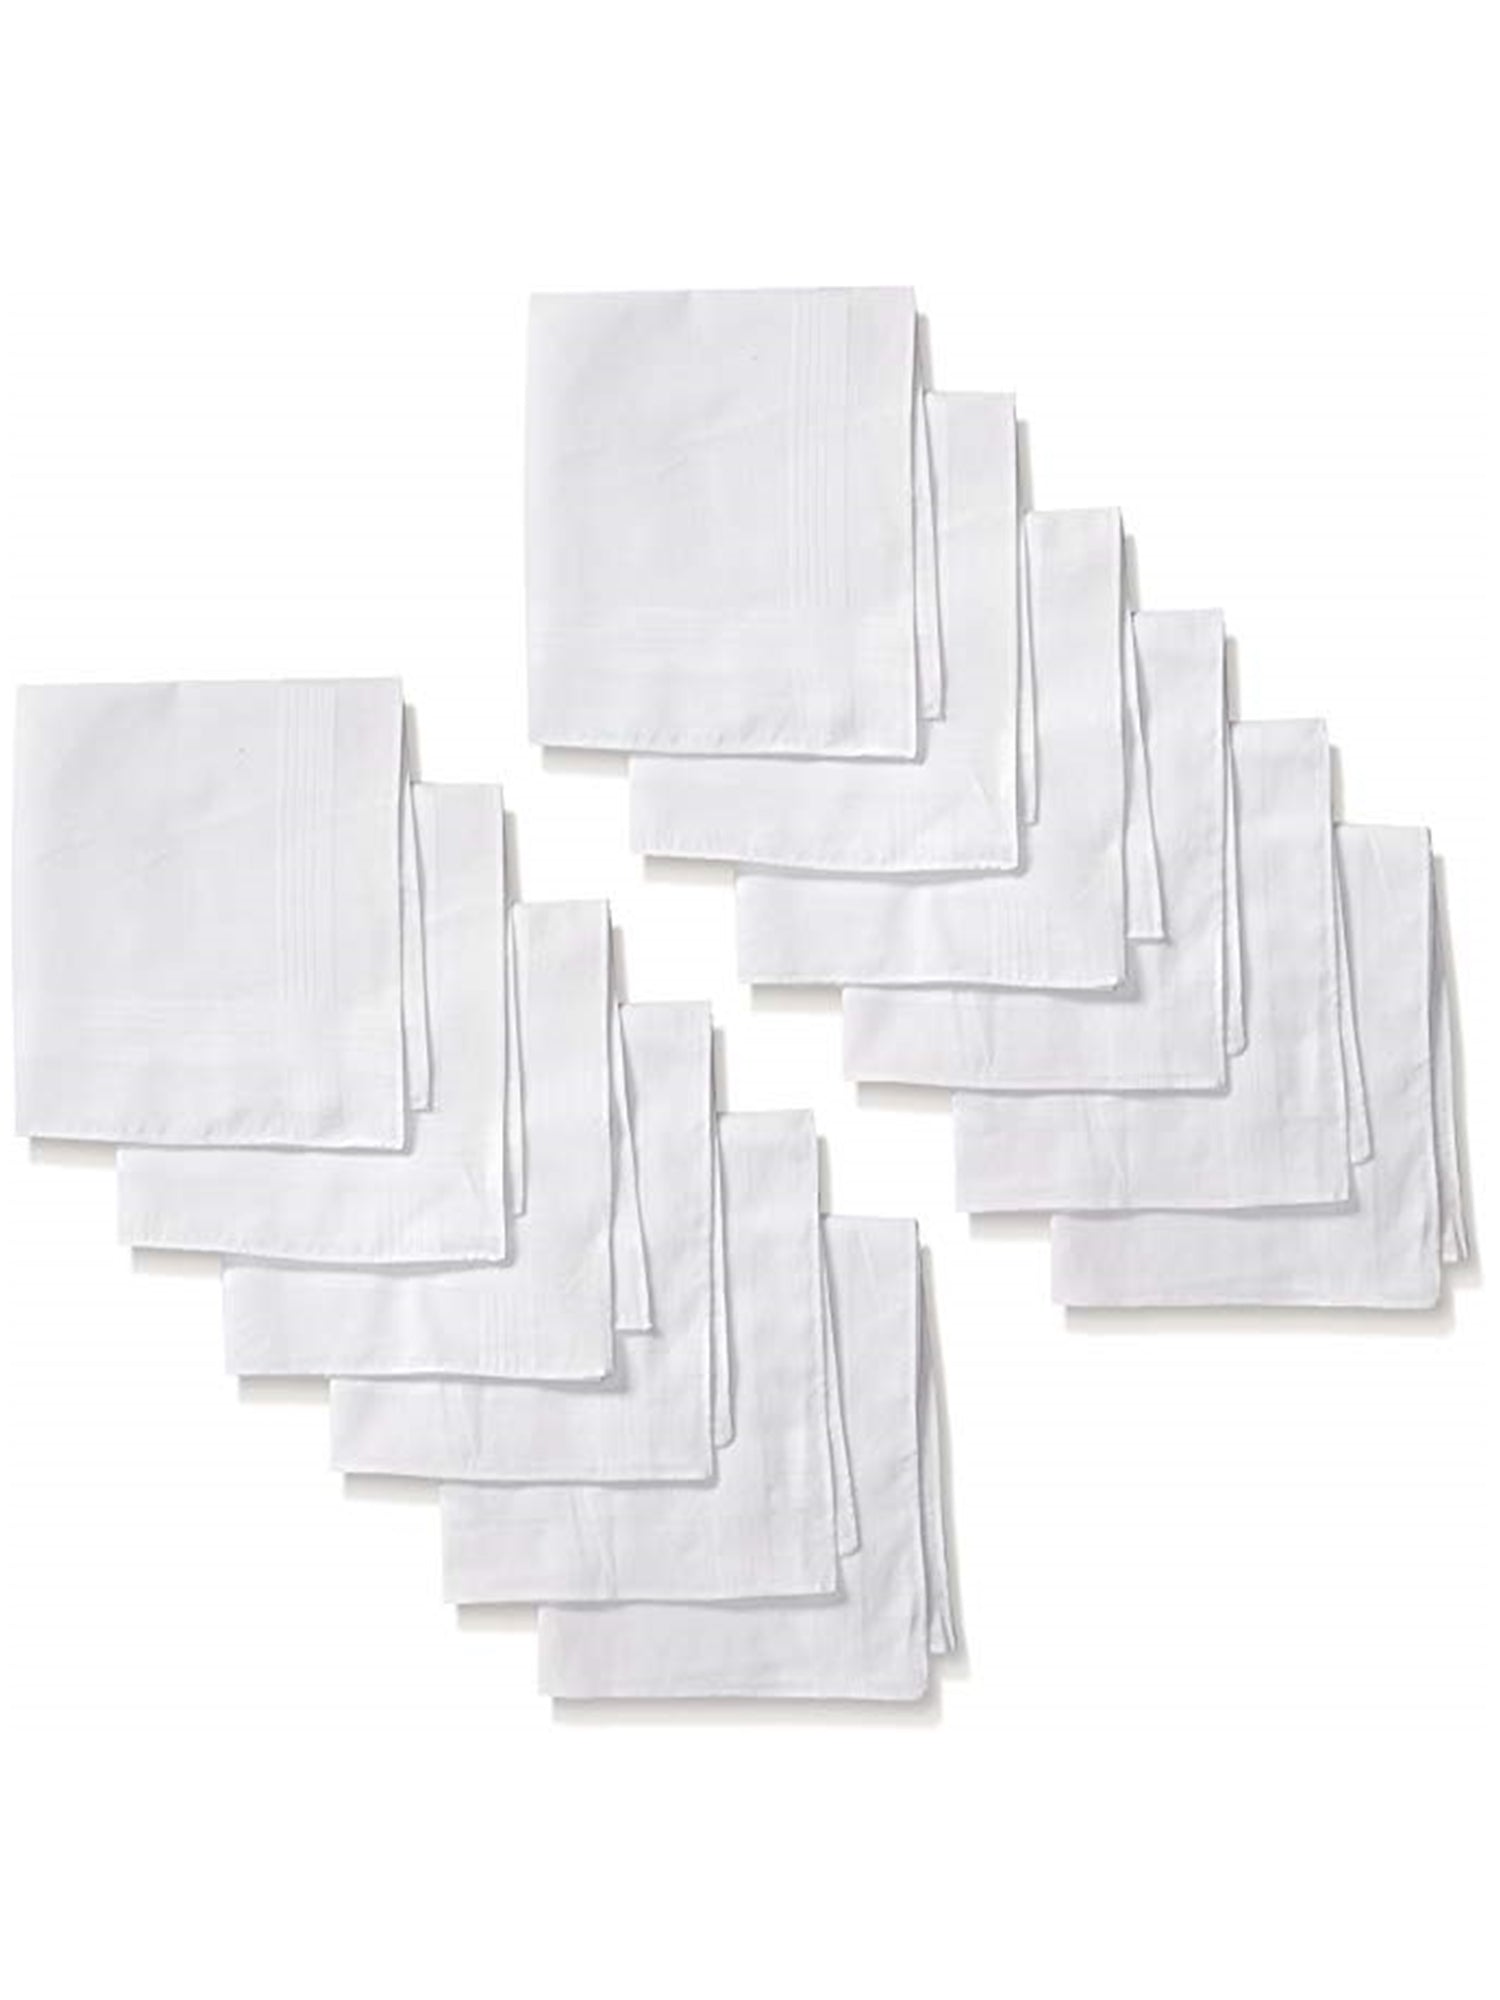 Men's White 100% Cotton Soft Finish Handkerchiefs Prefolded Pocket Squares UMO LORENZO 12 Pieces - White Regular 